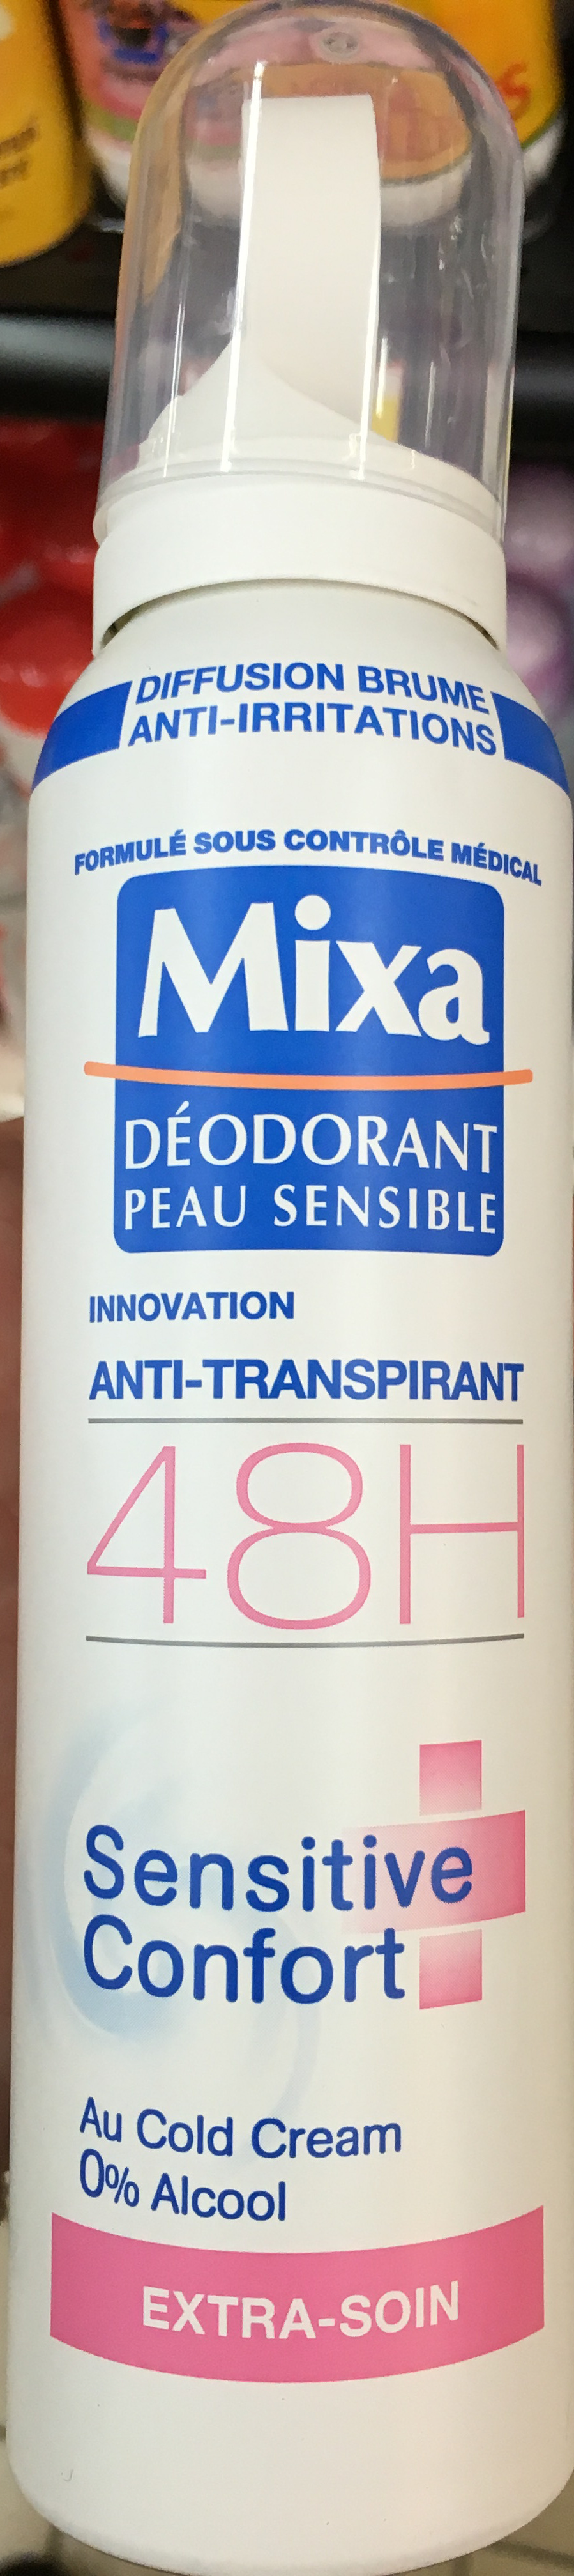 Déodorant Peau Sensible Innovation Anti-Transpirant 48H Sensitive Confort Extra-Soin - Product - fr